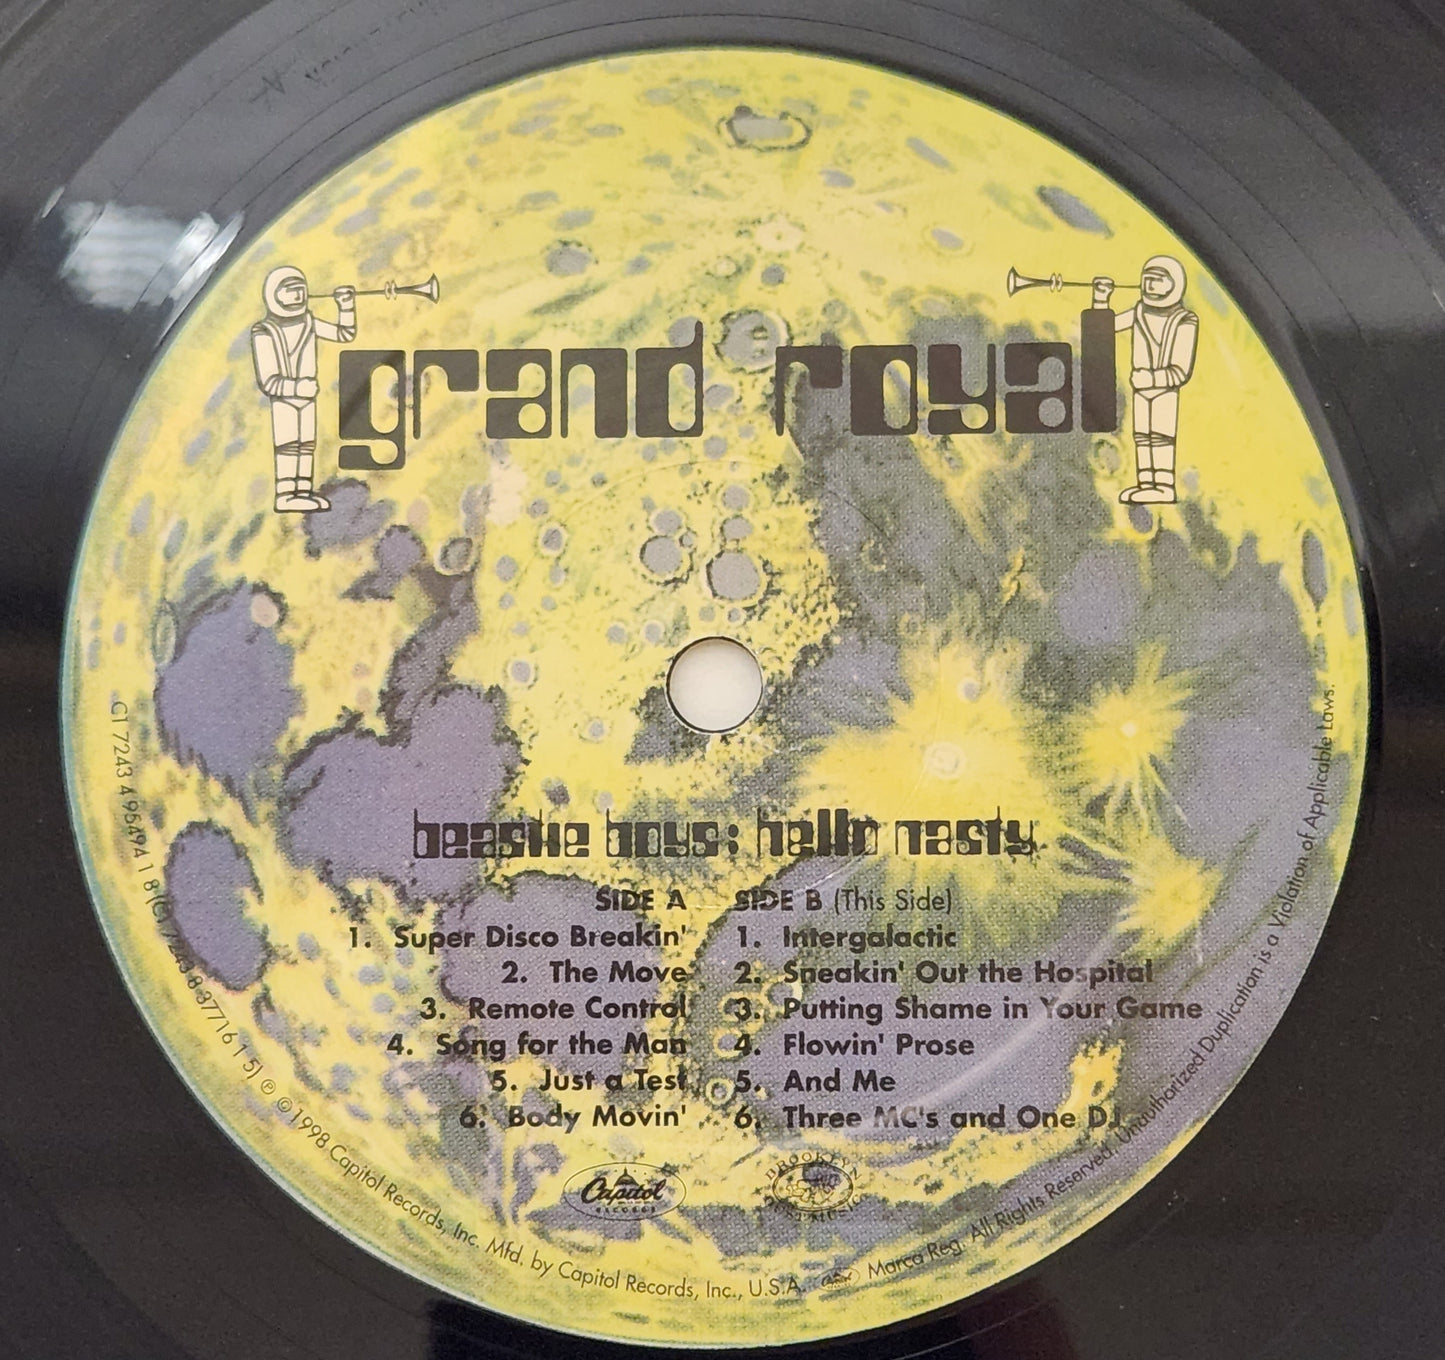 Beastie Boys "Hello Nasty" 1998 Electronic Hip Hop 2 LP Album